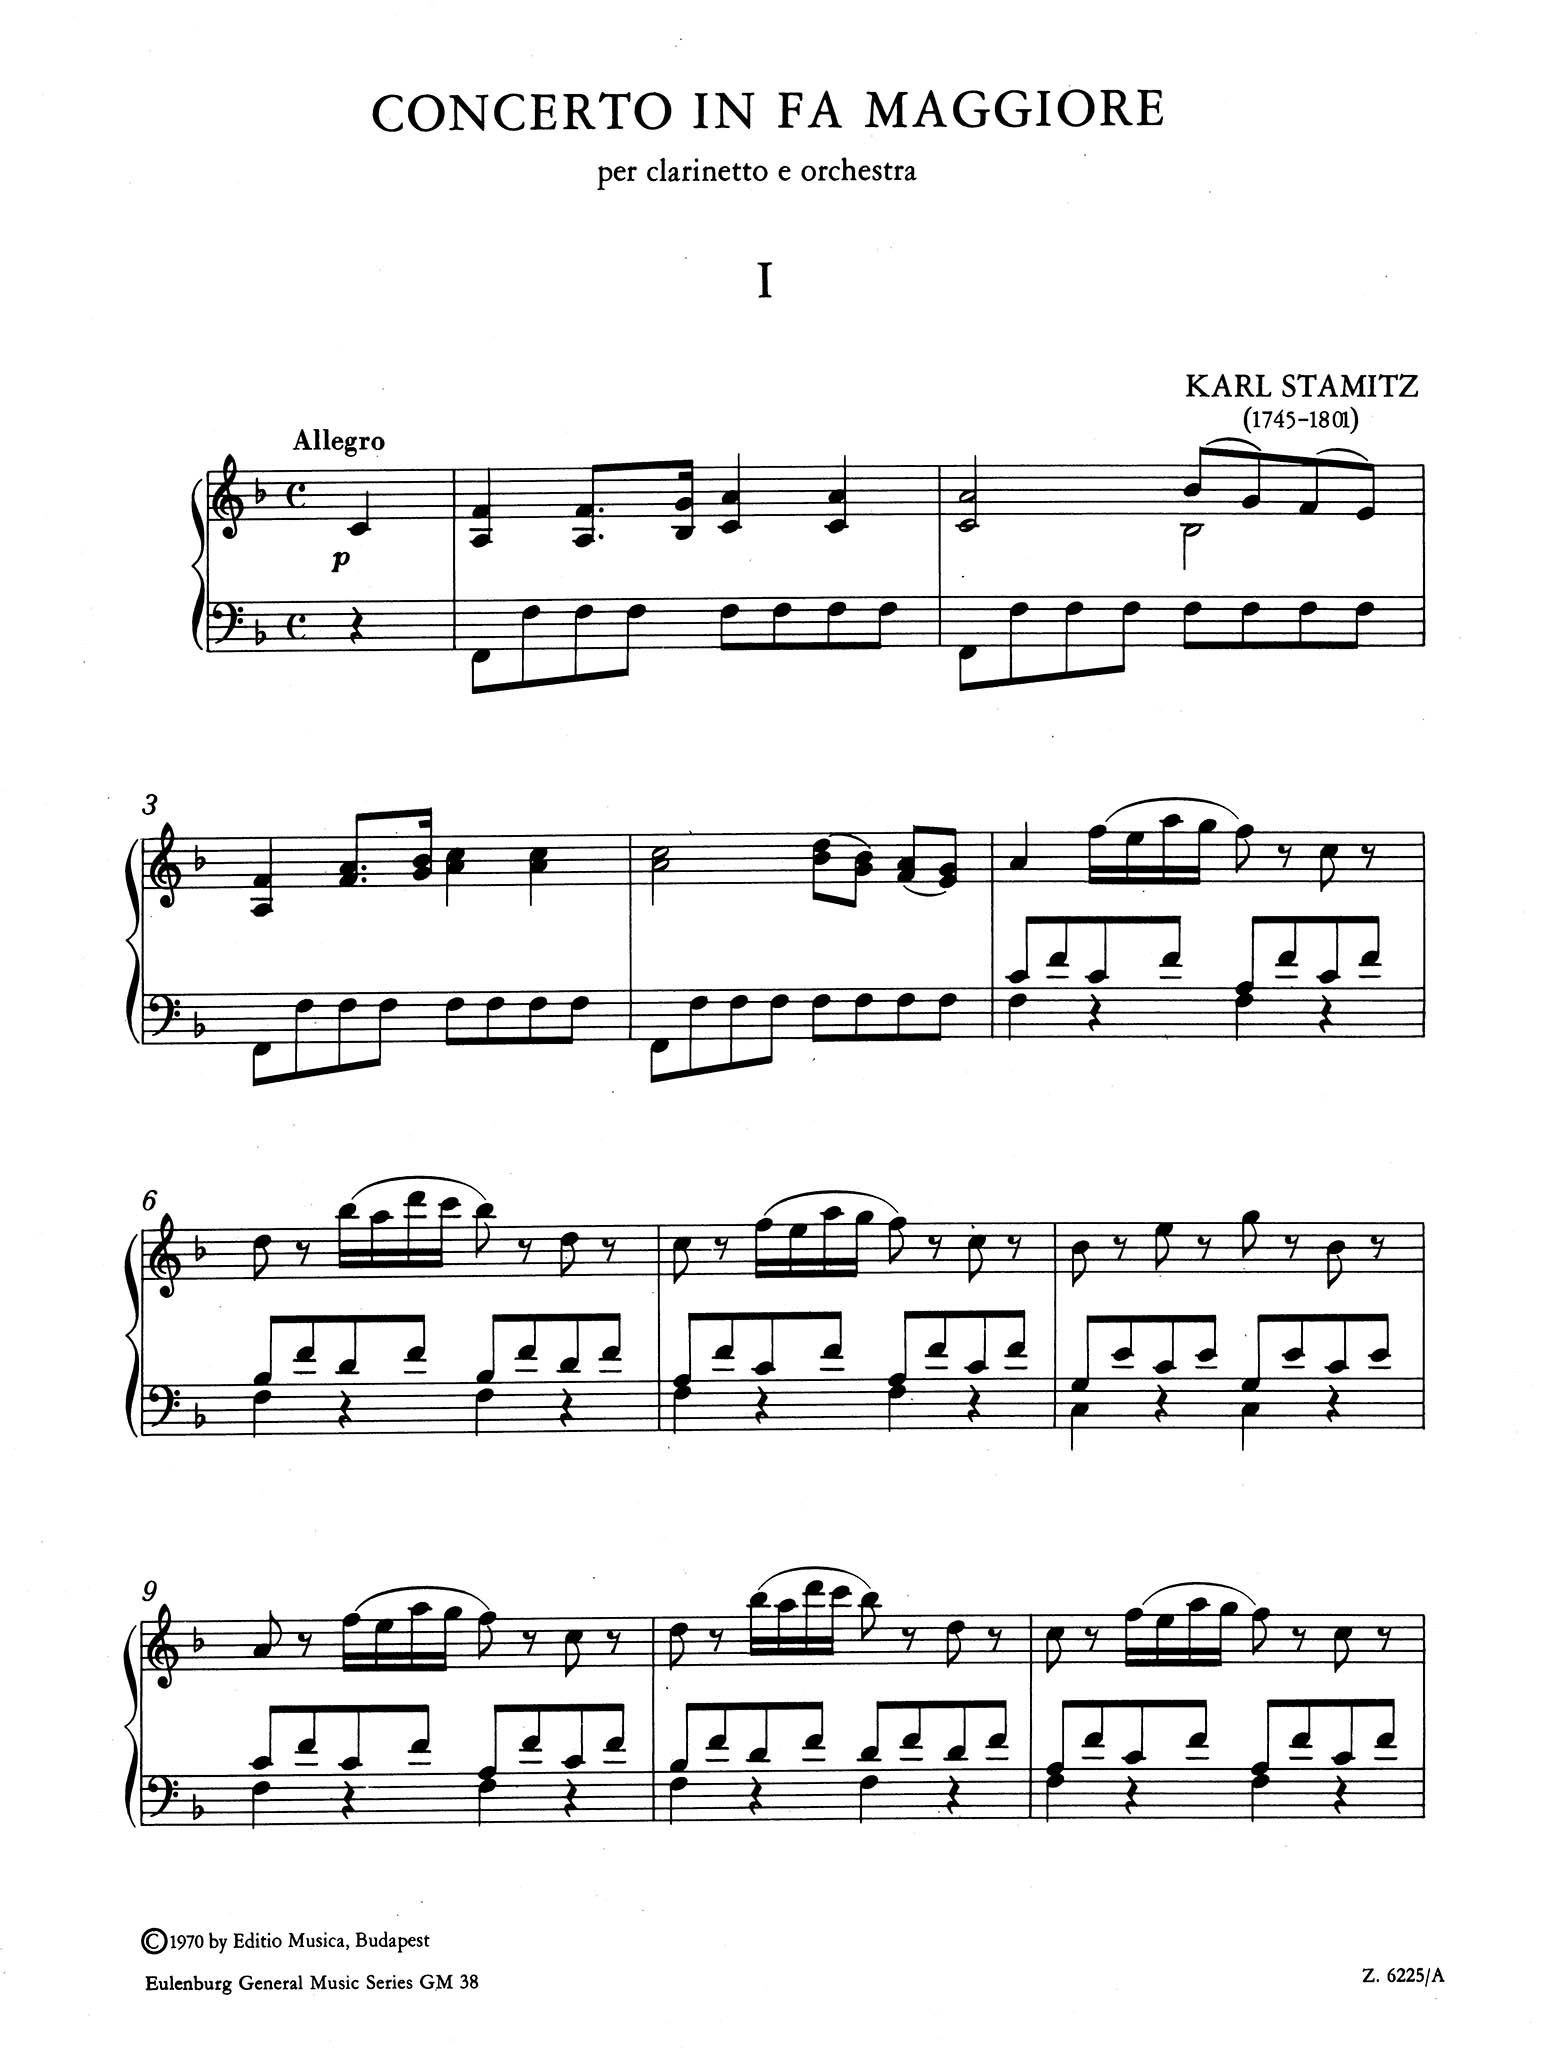 Clarinet Concerto No. 1 (Kaiser) in F Major - Movement 1